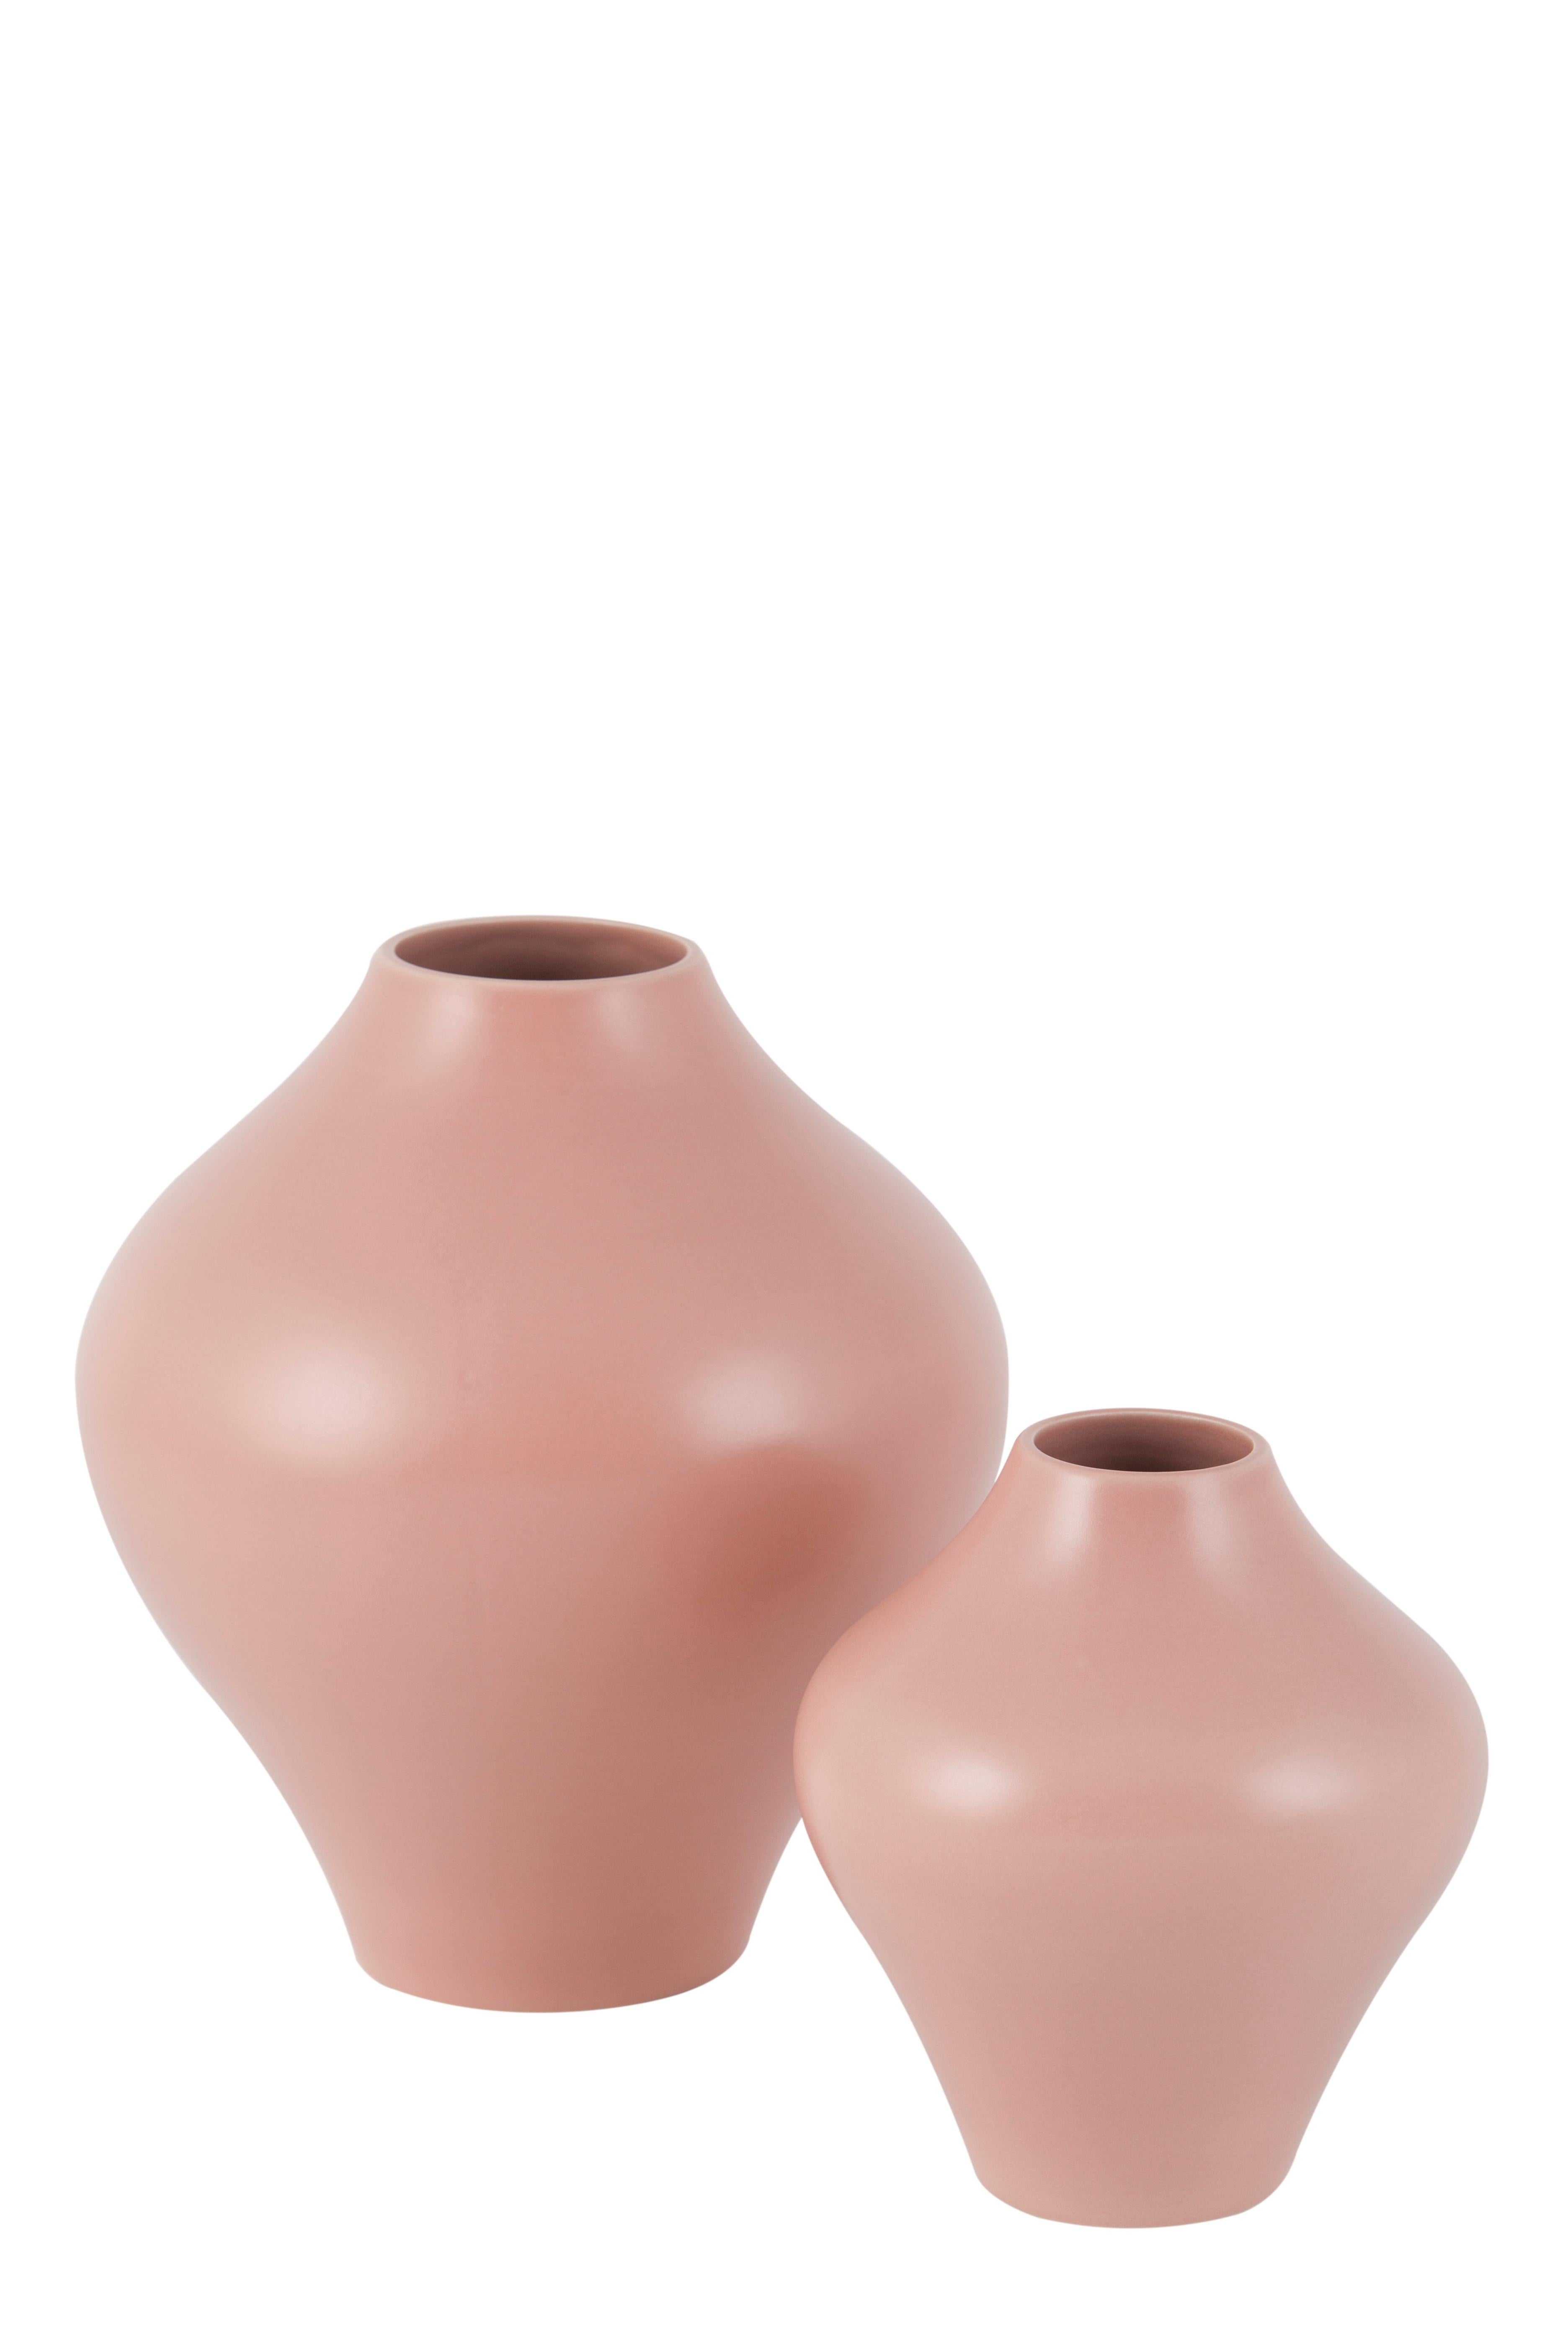 Portuguese Set/8 Ceramic Vases, White & Peach, Handmade in Portugal by Lusitanus Home For Sale